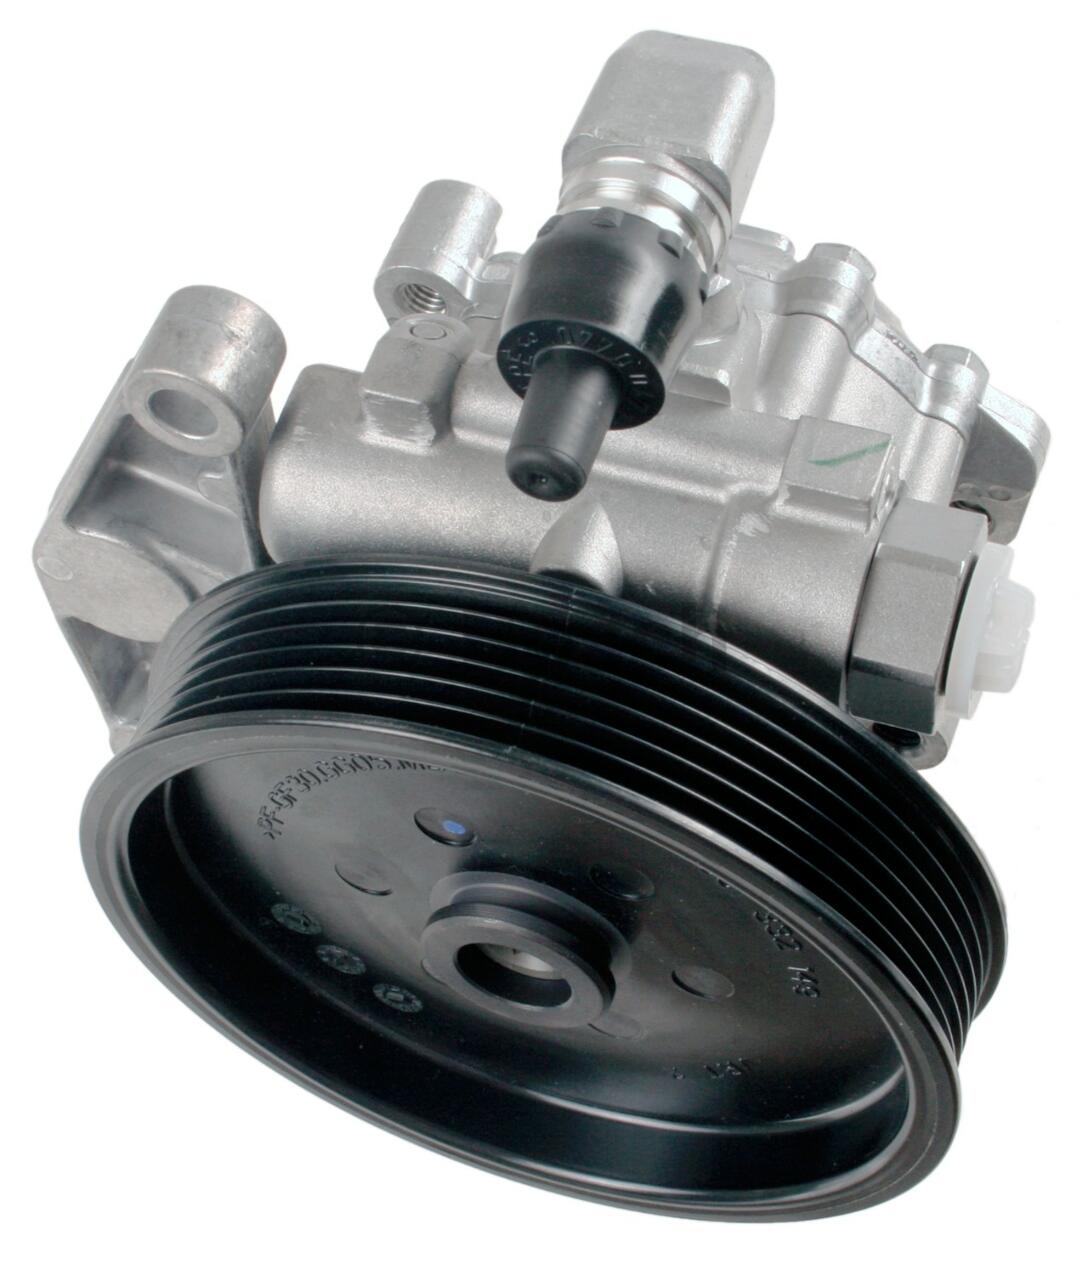 Mercedes Power Steering Pump (Rebuilt) 005466160170 - Bosch KS01000607